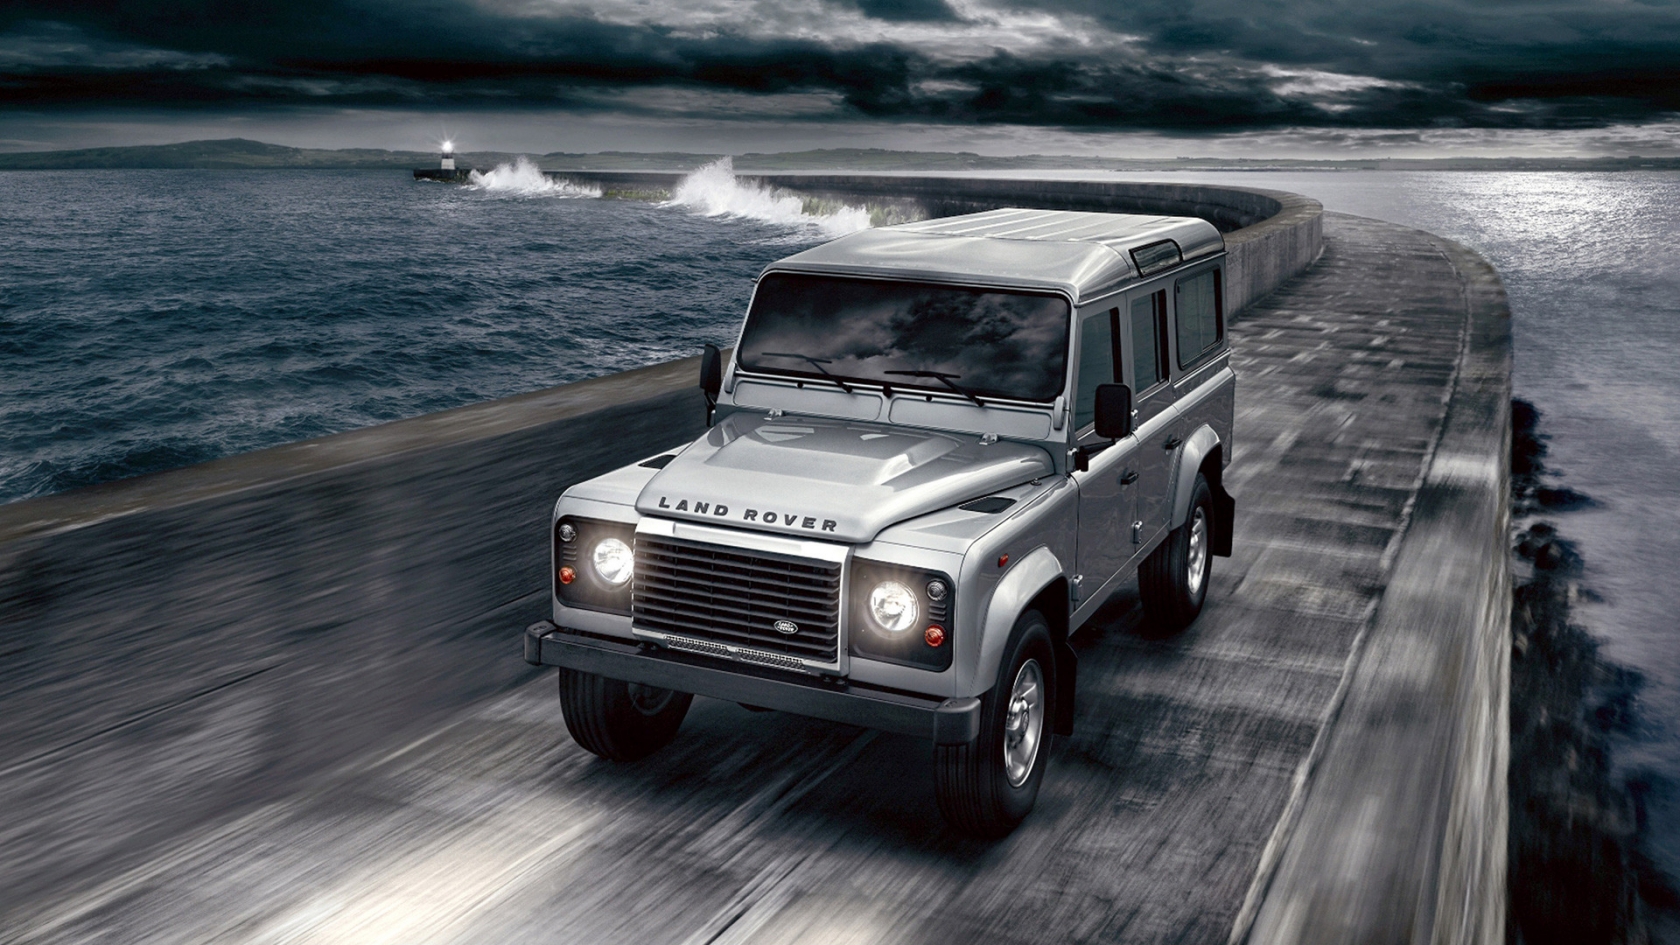 2012 Land Rover Defender for 1680 x 945 HDTV resolution